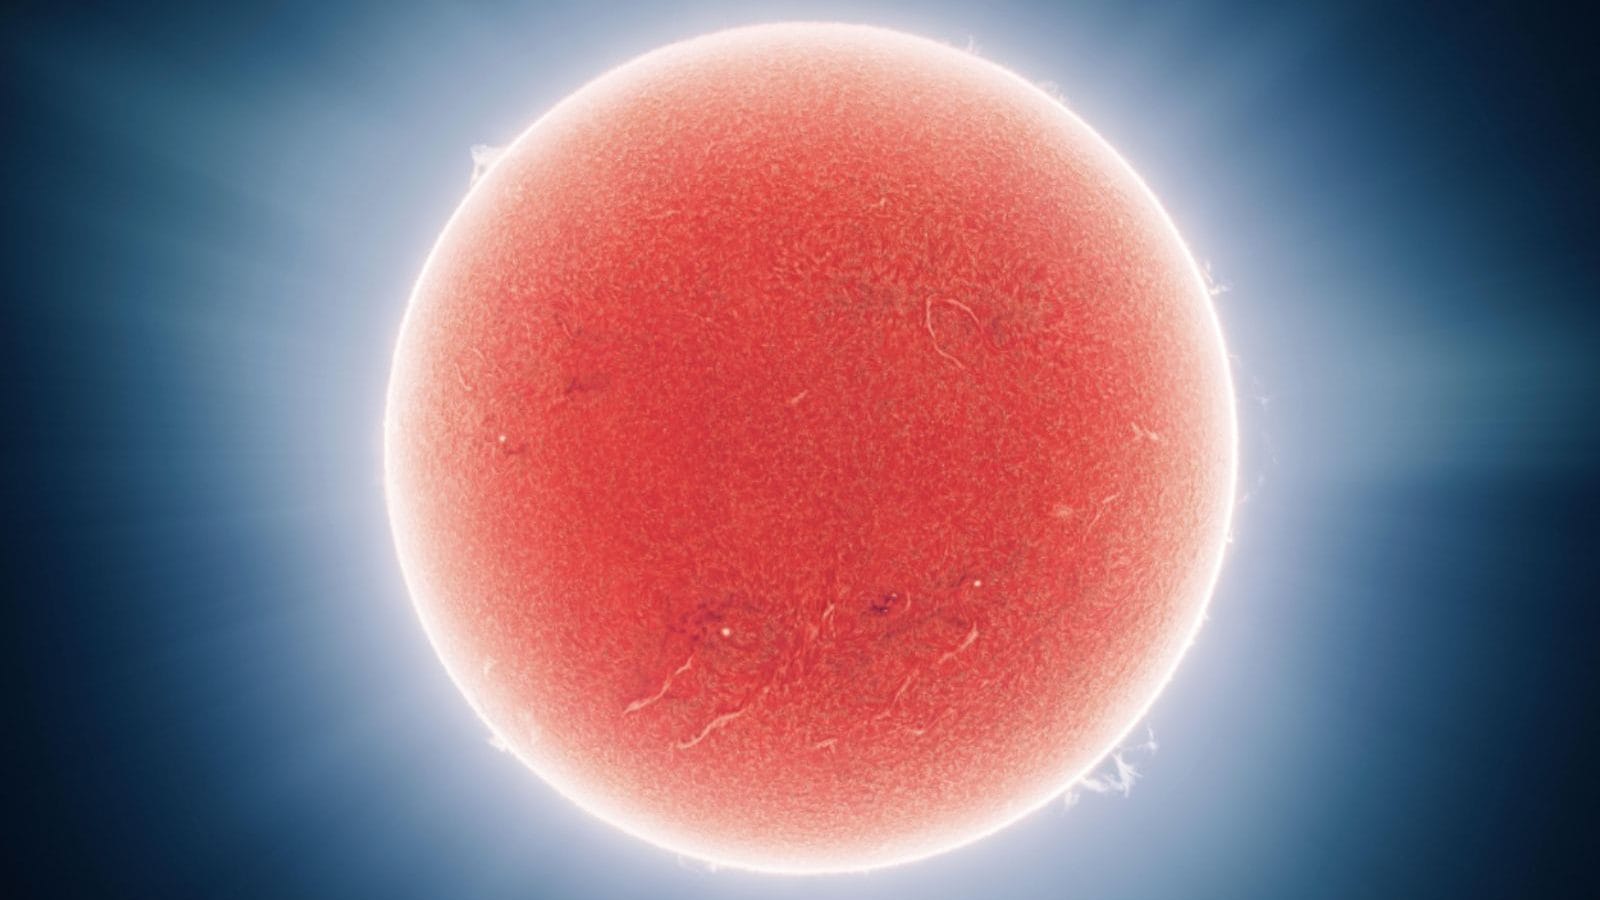 Солнце через телескоп. Плазма. Эндрю Маккарти фото солнца. Луна в телескоп фото. Reddit balls